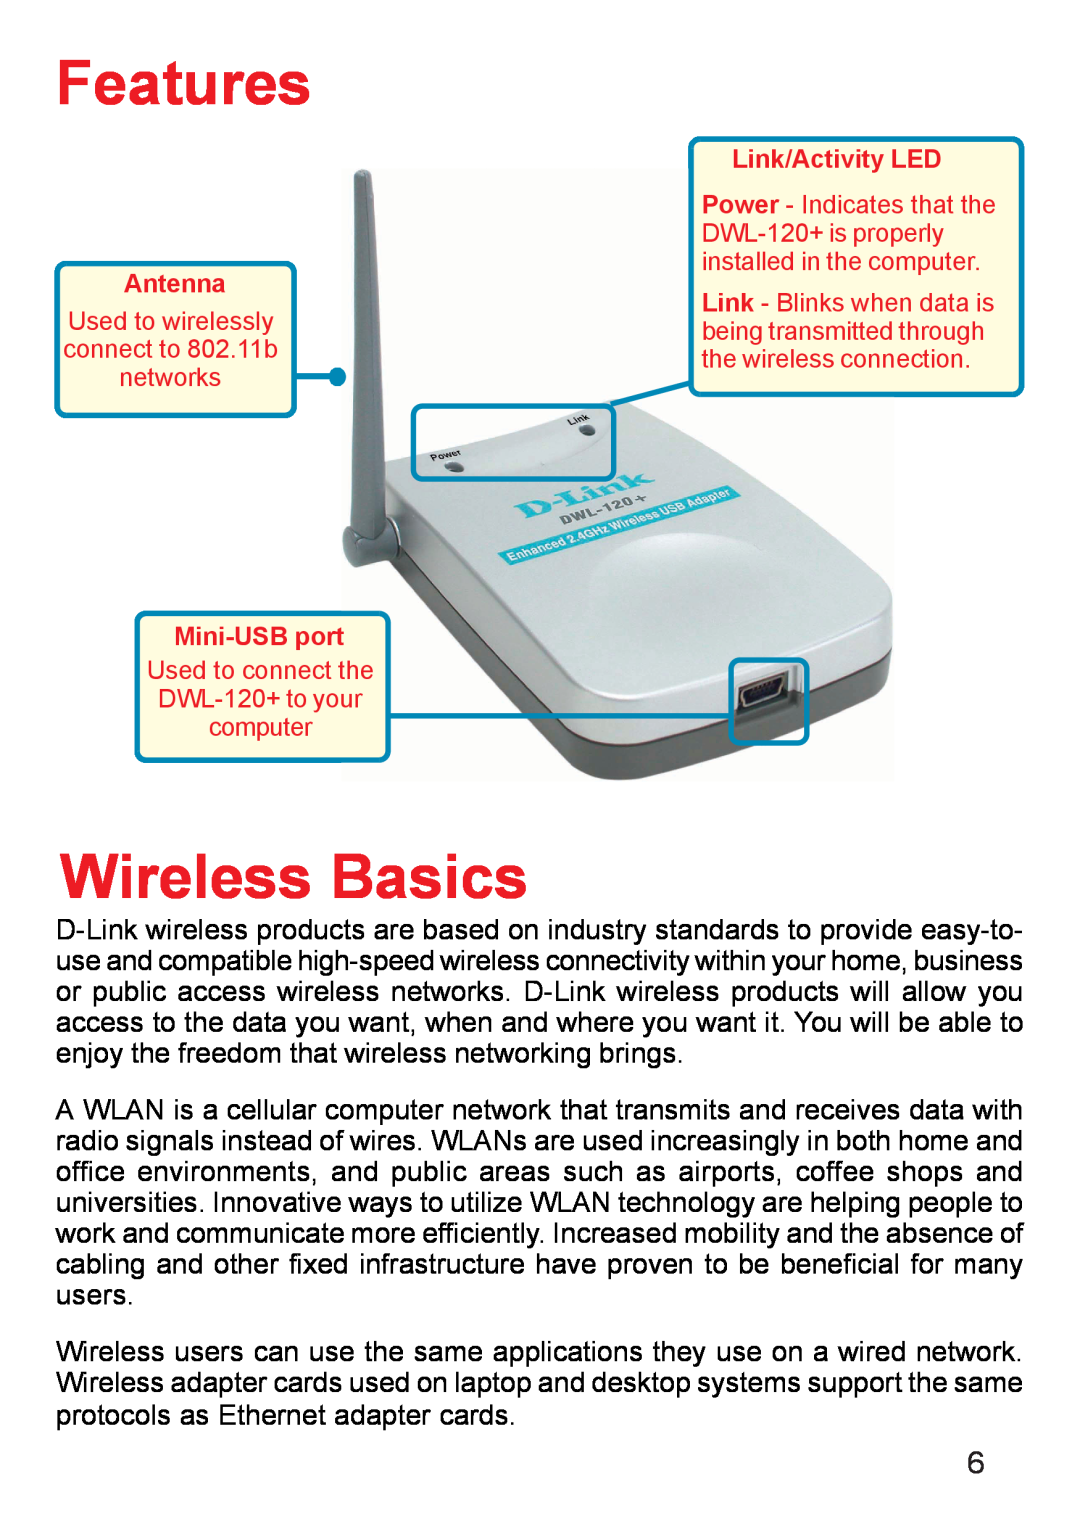 D-Link DWL-120+ manual Features, Wireless Basics, Antenna, Mini-USB port, Link/Activity LED 